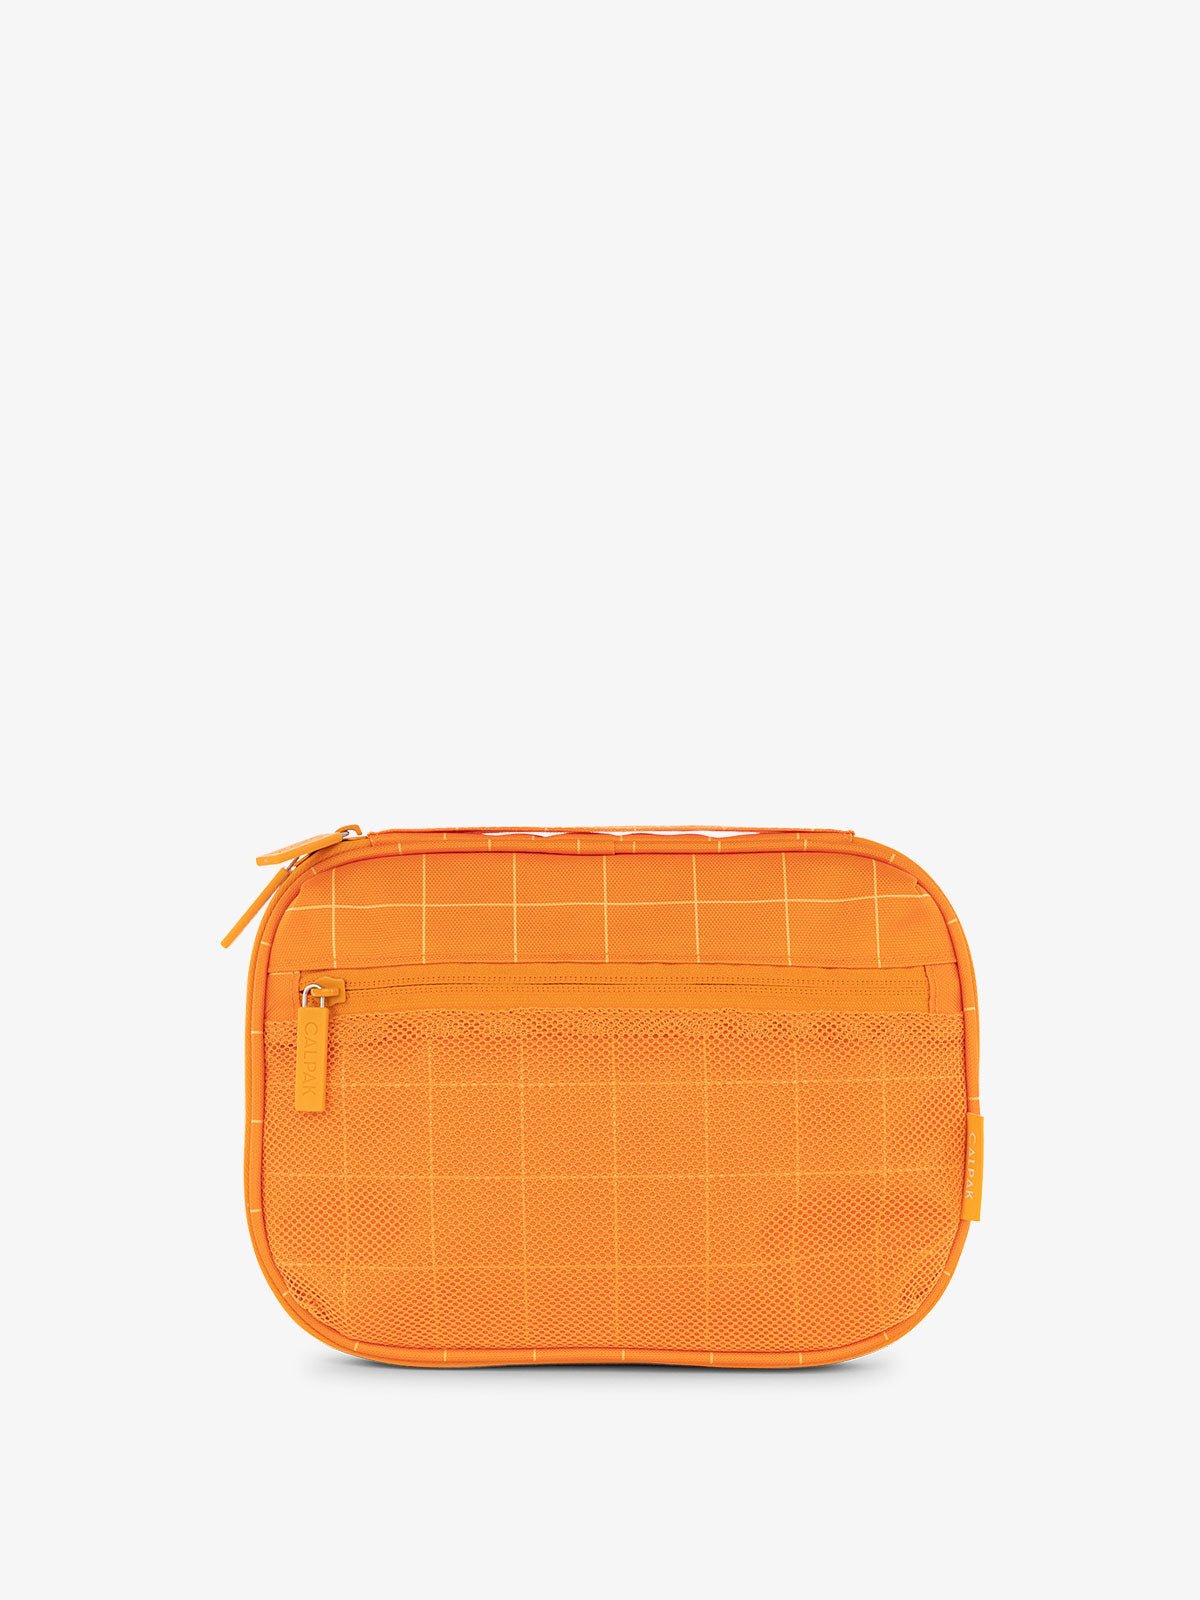 CALPAK Tech organizer with mesh front pocket in orange grid